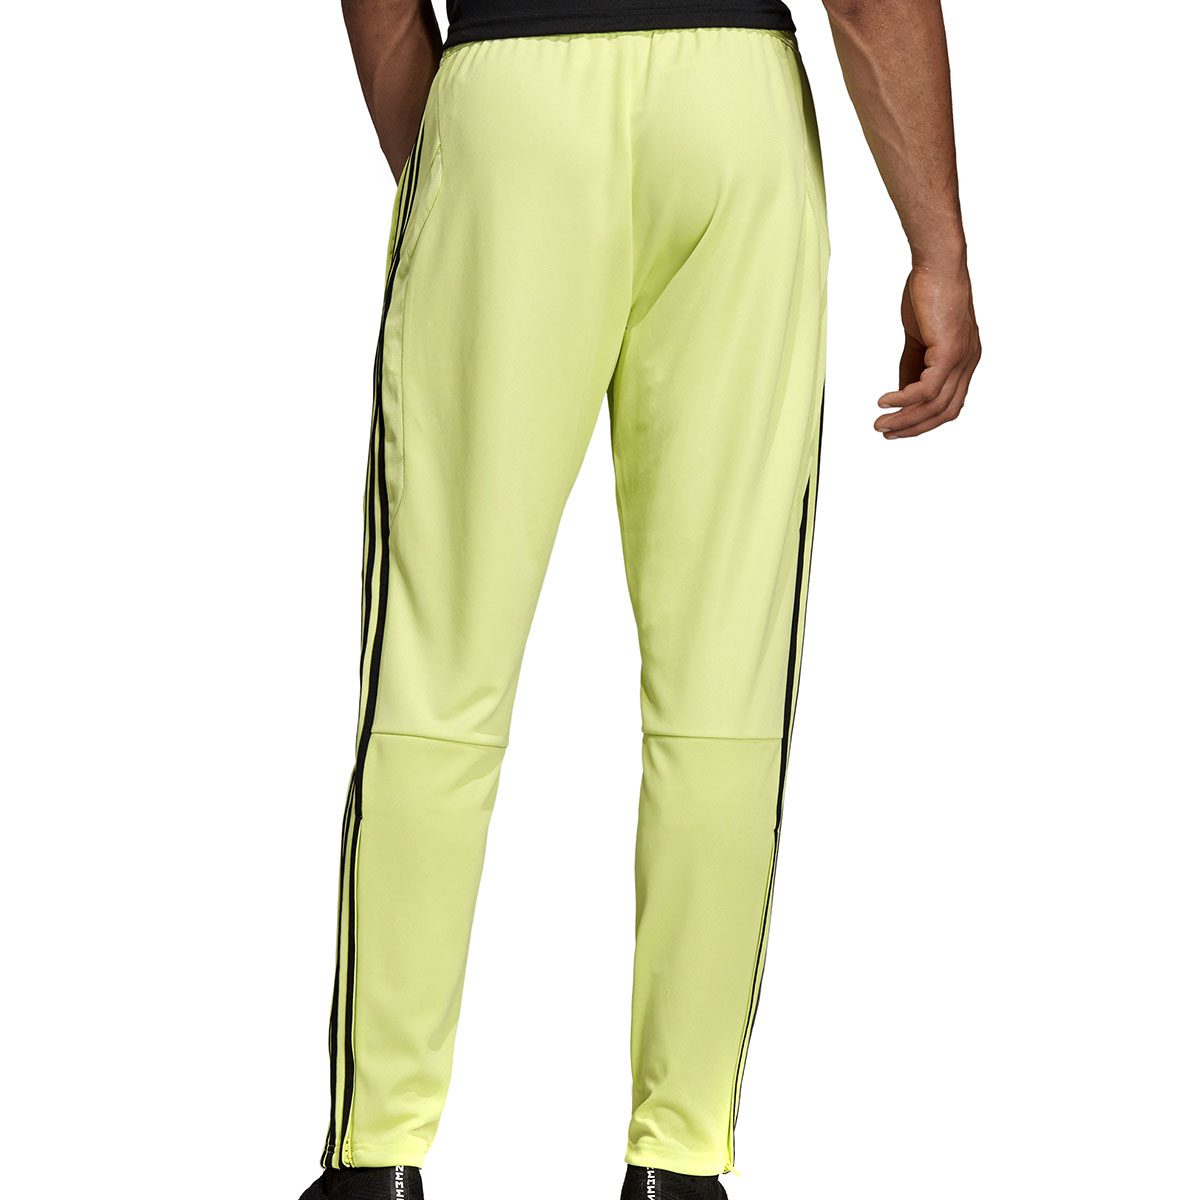 Adidas Men's Tiro 19 Semi Frozen Yellow/Black Training Pants ED6043 ...